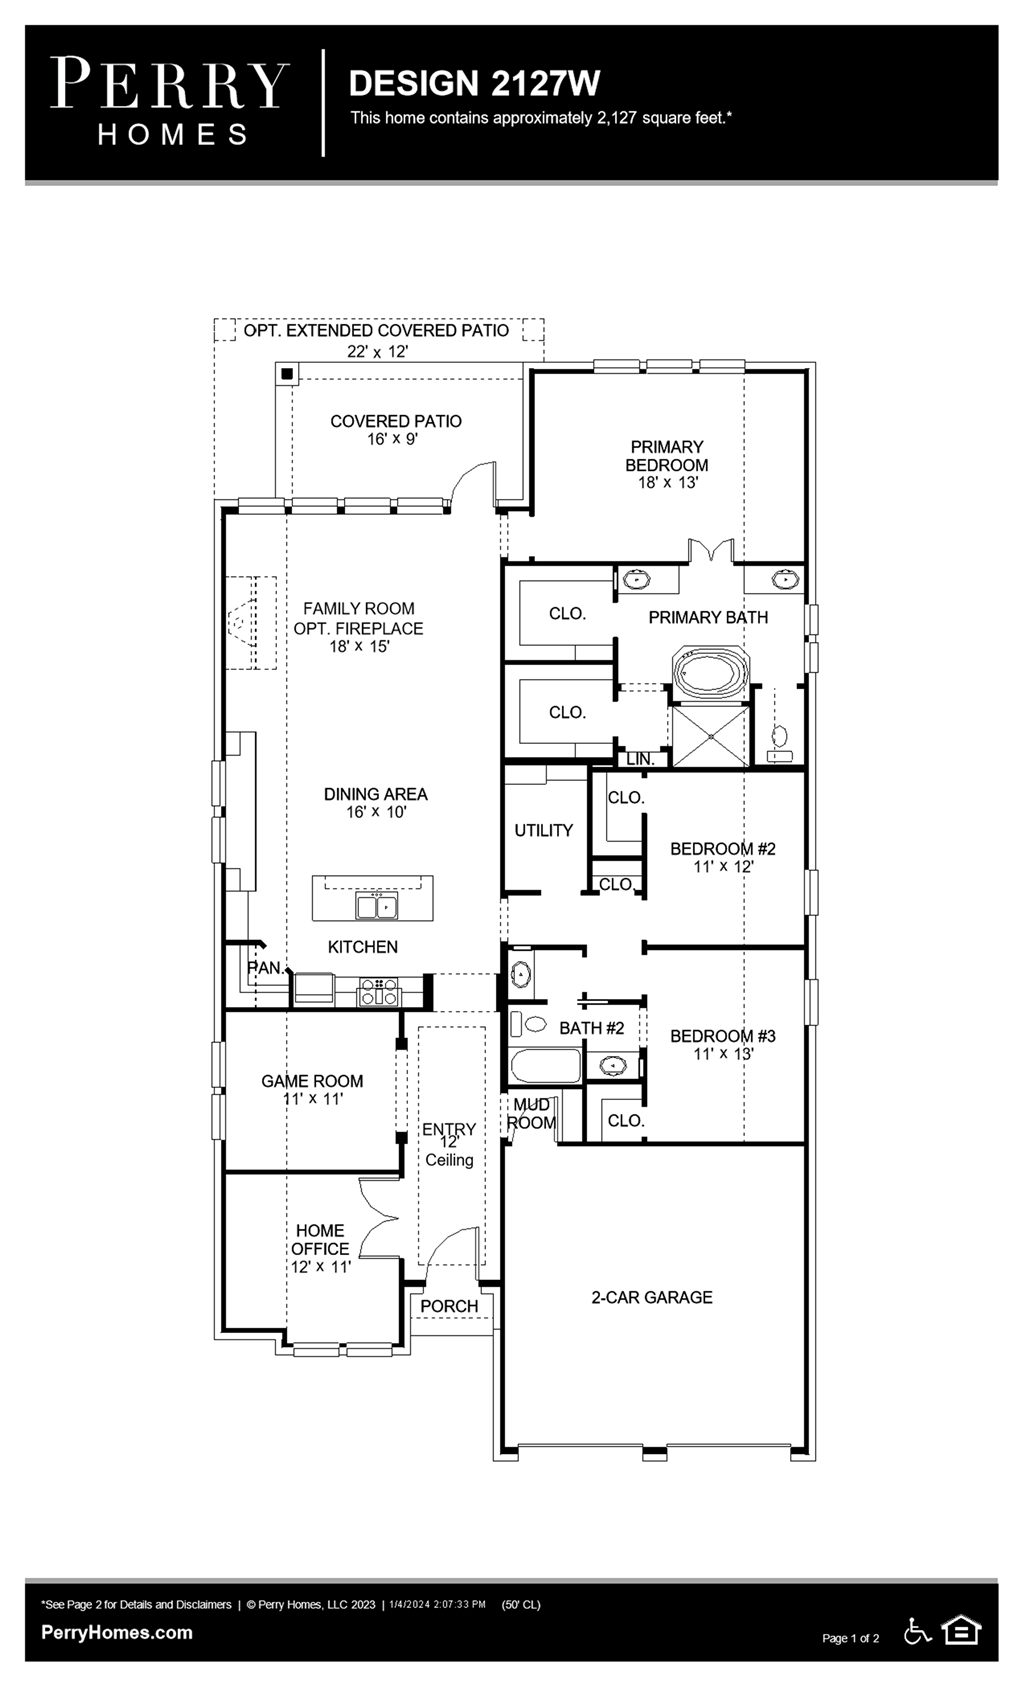 Floor Plan for 2127W